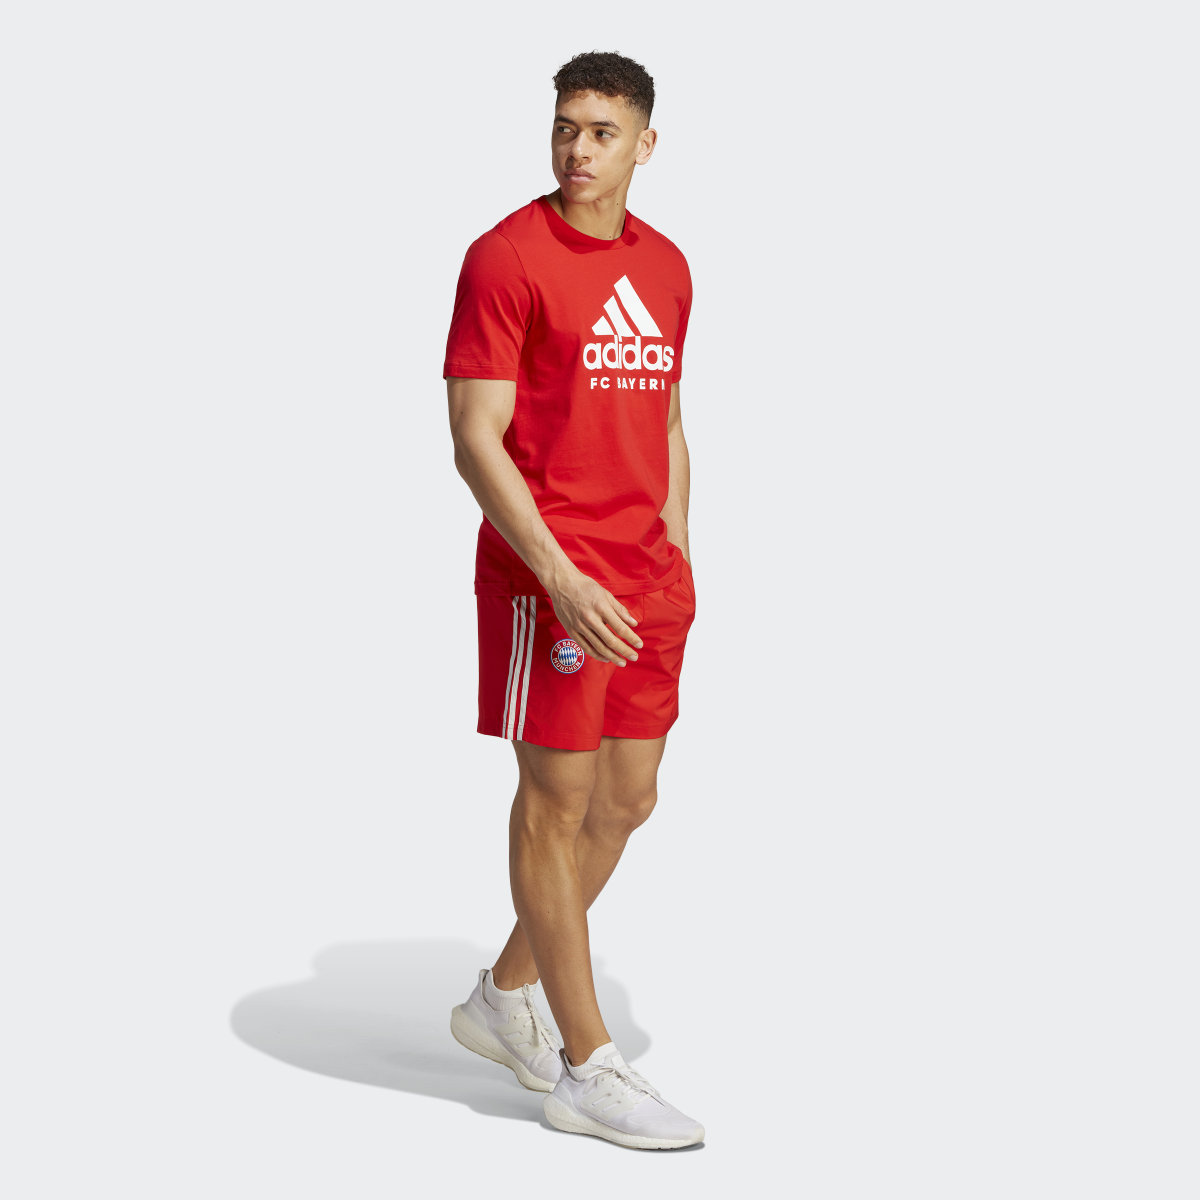 Adidas FC Bayern DNA Graphic T-Shirt. 4